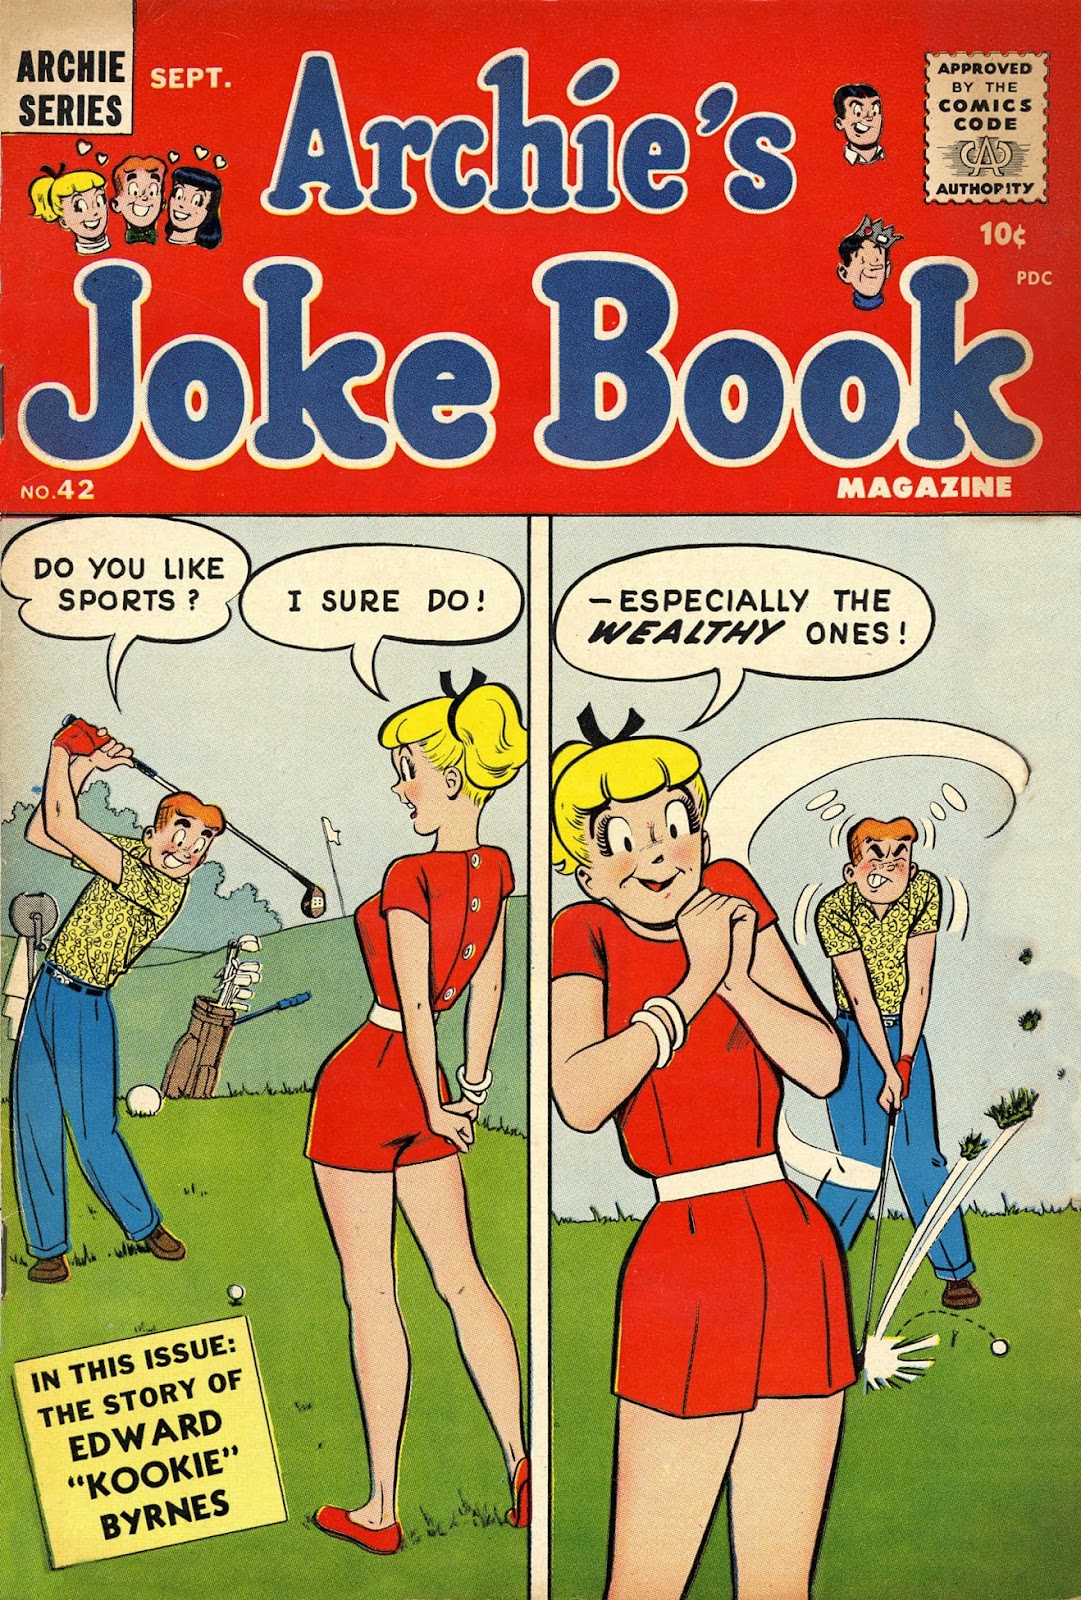 Archie's Joke Book Magazine issue 42 - Page 1